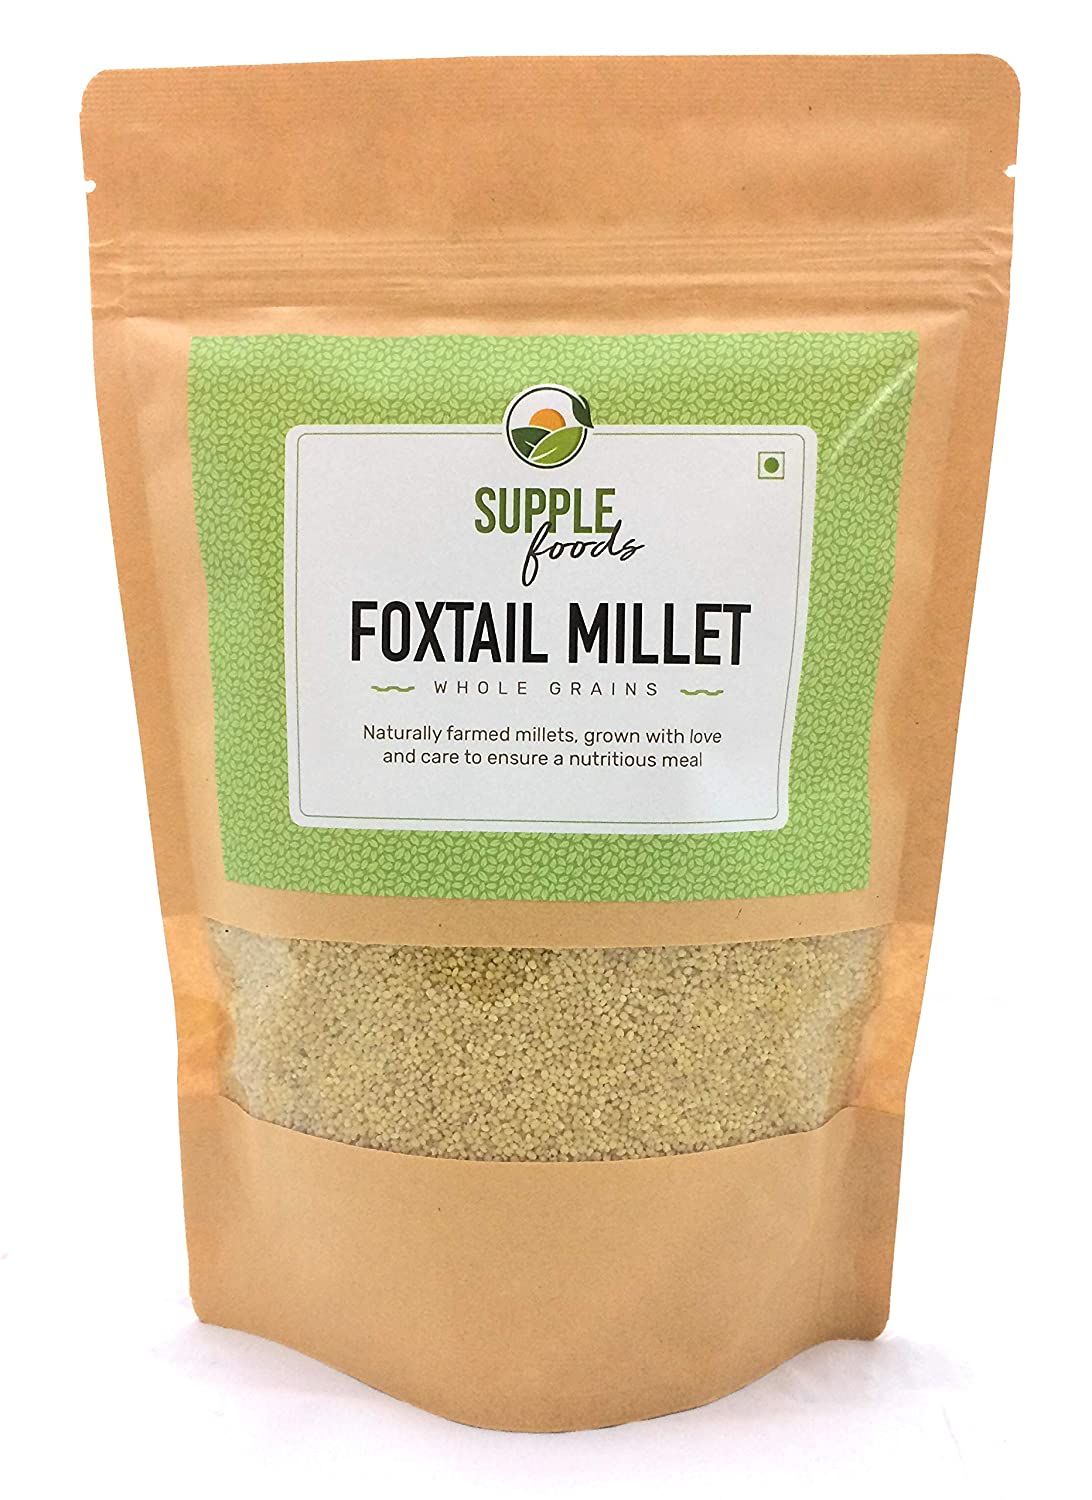 SUPPLE Foods Foxtail Millets Grain Image